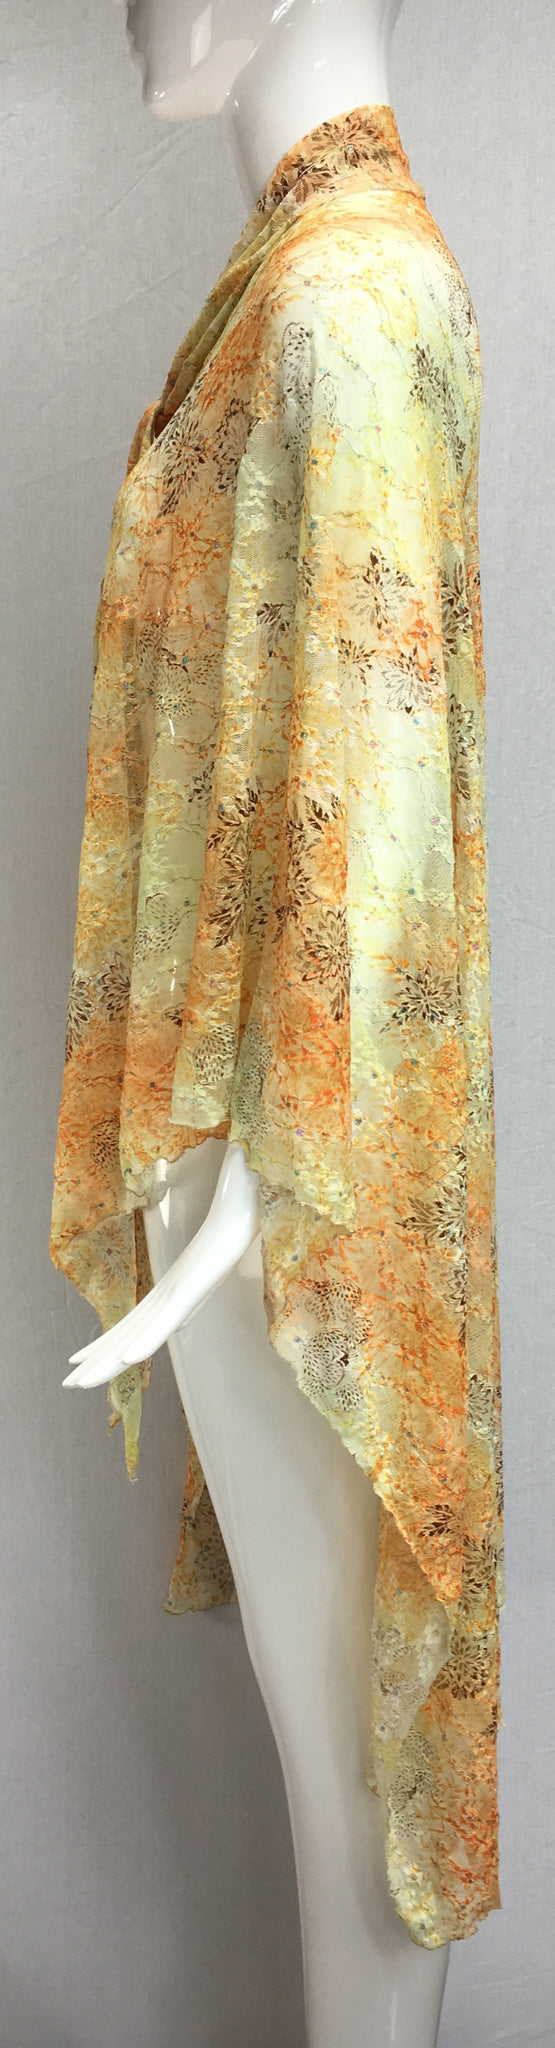 Janet Deleuse Designer Lace Wrap, SOLD